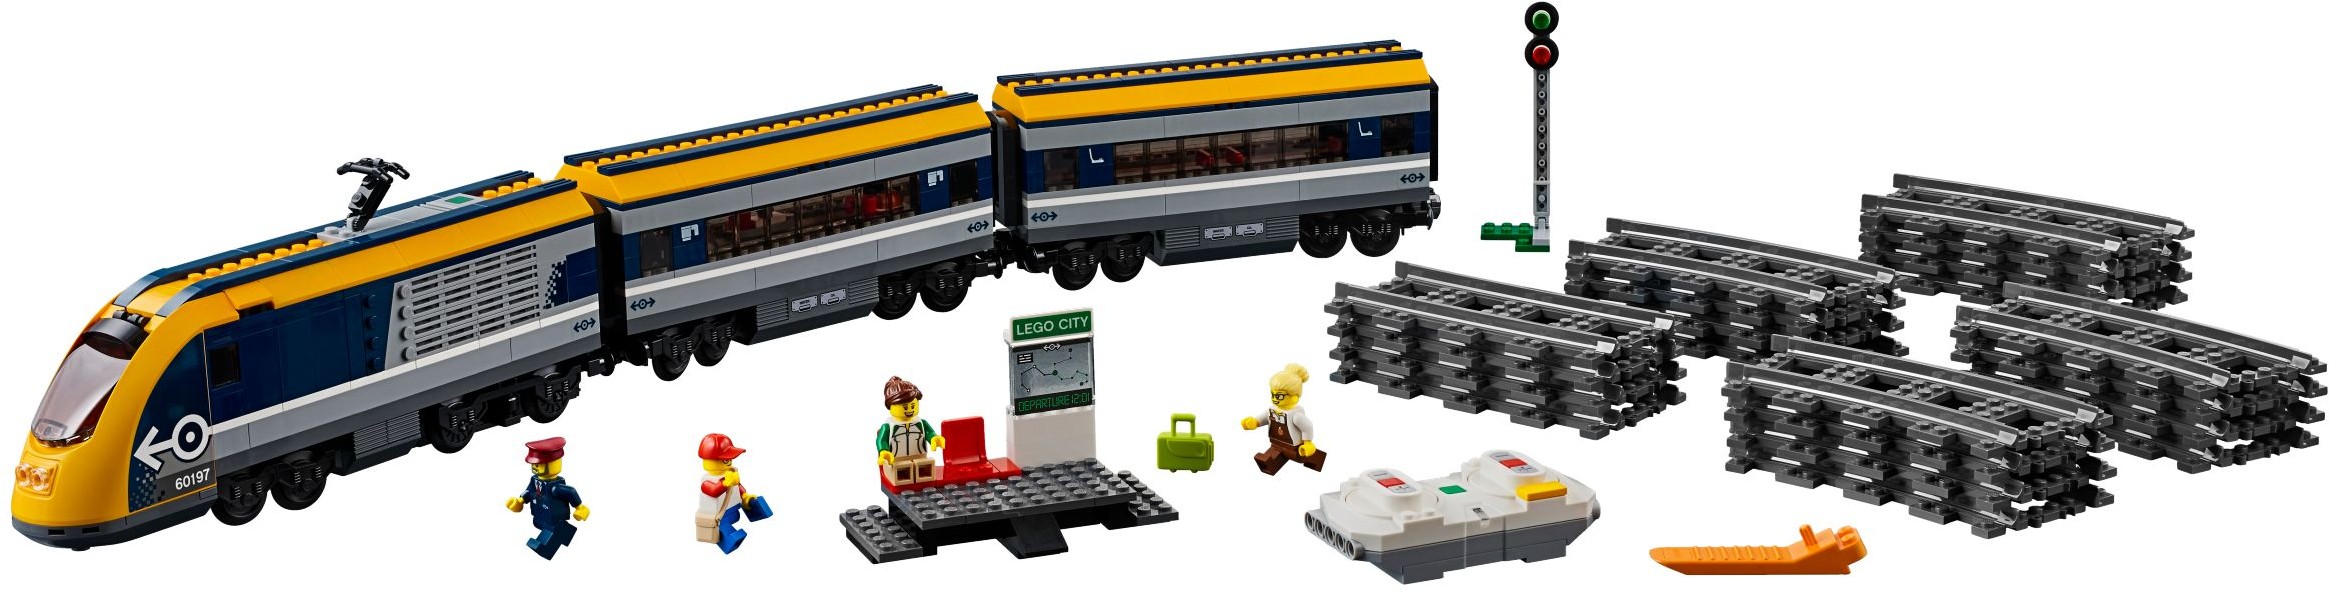 2018 lego train sets